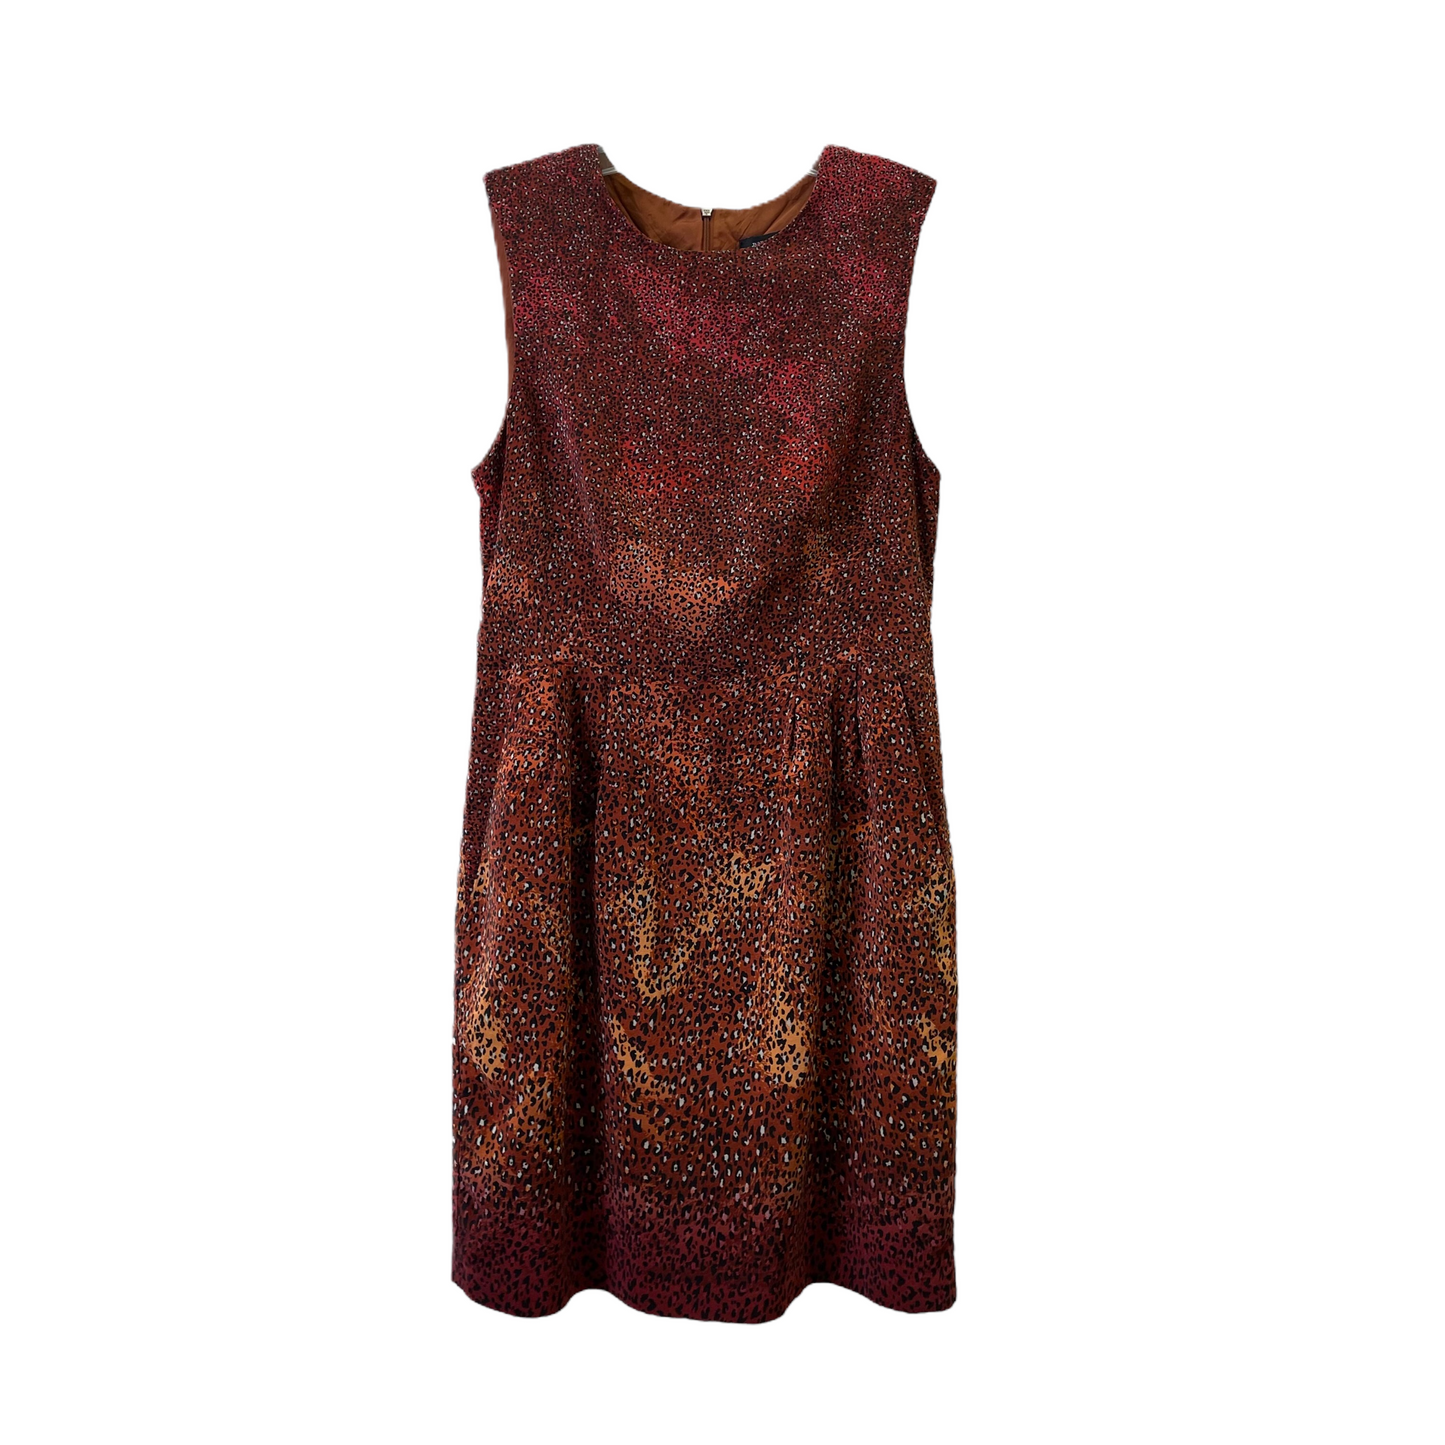 Animal Print Dress Casual Maxi By Nanette Lepore, Size: 8